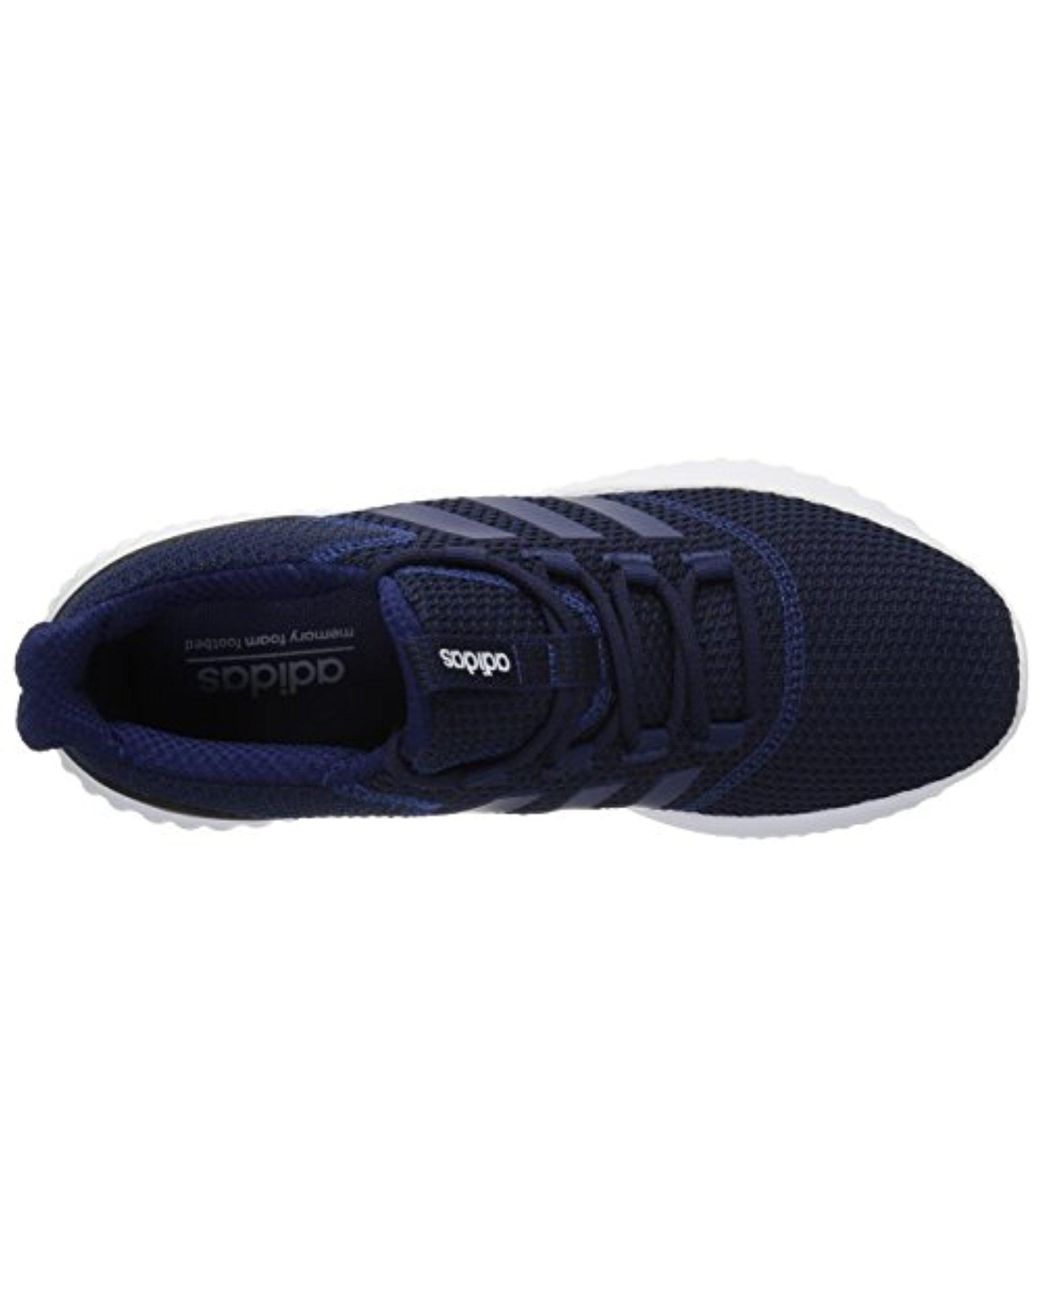 adidas Cloudfoam Ultimate Running Shoe in Dark Blue/Dark Blue/Black (Blue)  for Men | Lyst